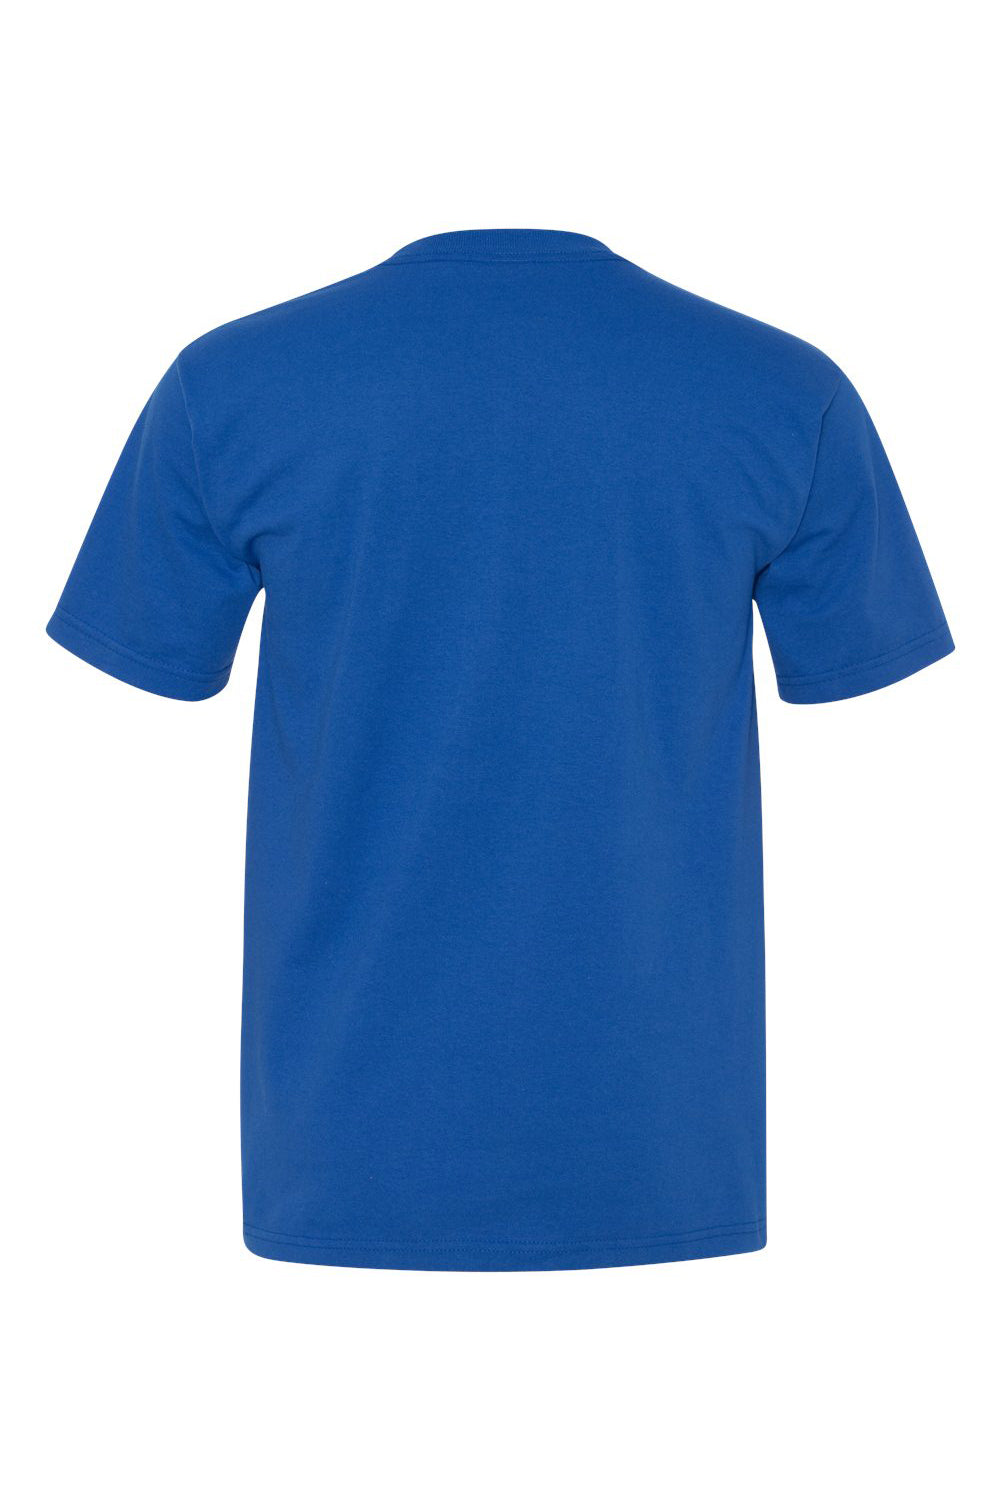 Bayside BA3015 Mens USA Made Short Sleeve Crewneck T-Shirt w/ Pocket Royal Blue Flat Back